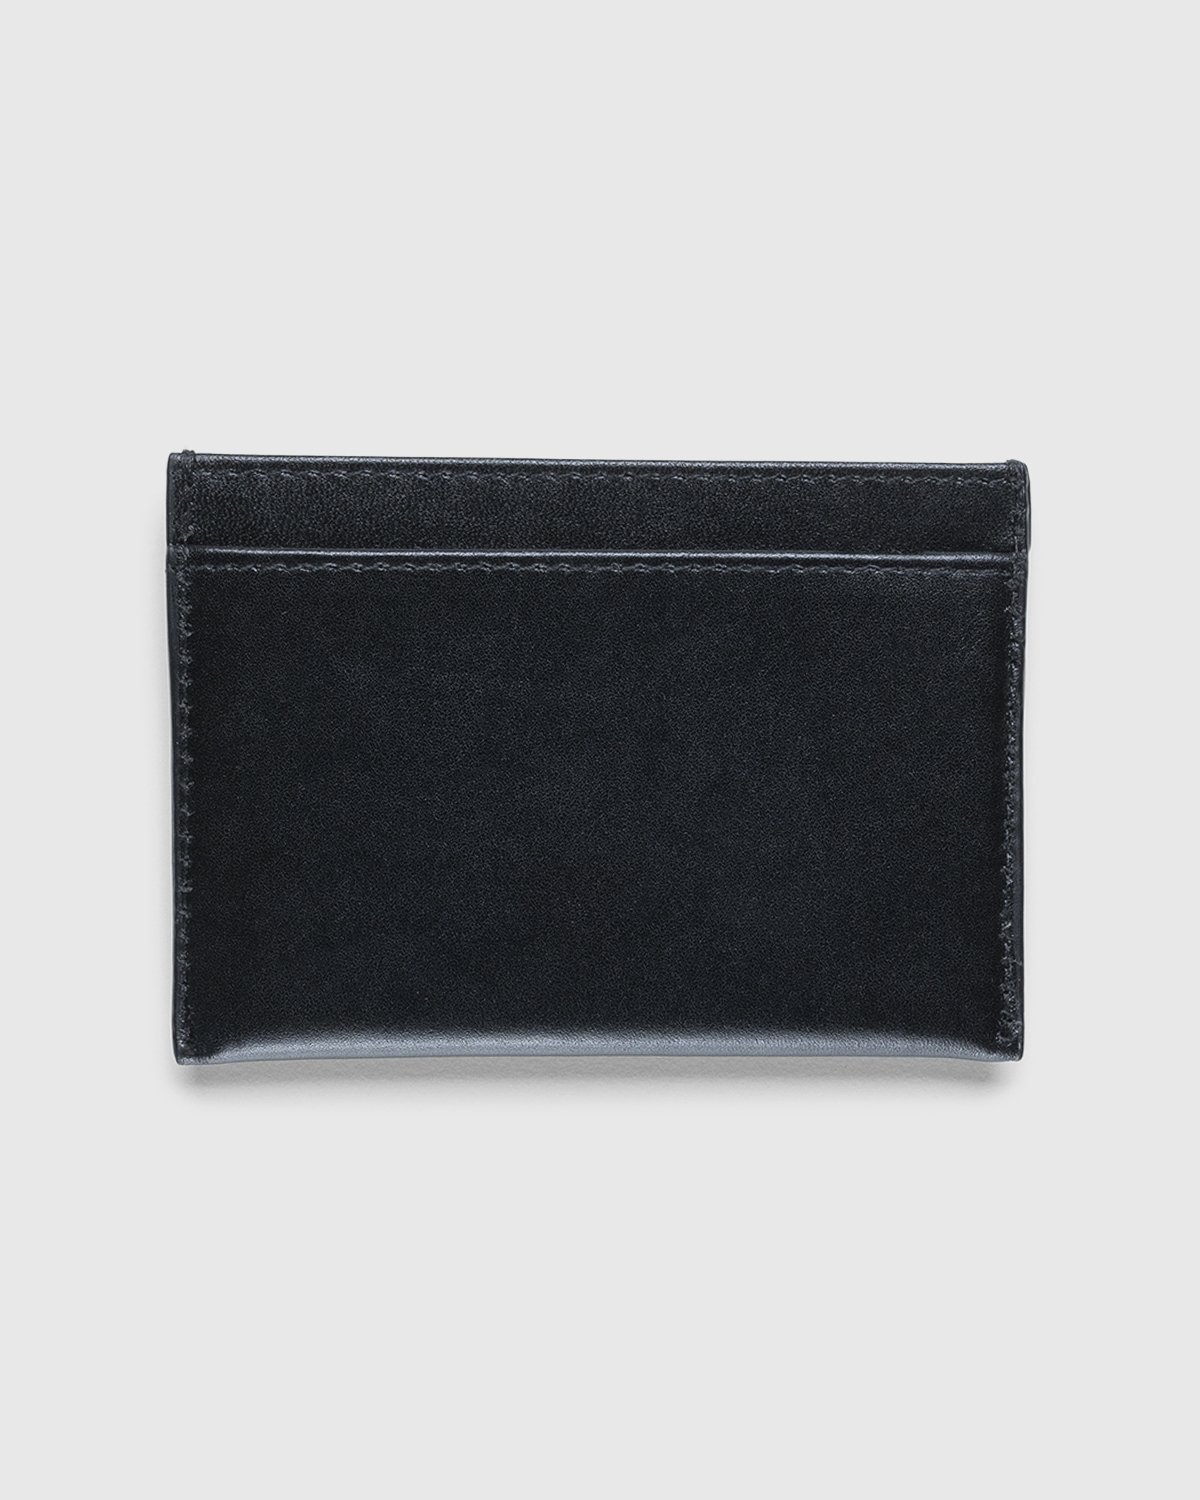 Dries van Noten - Leather Card Holder Black - Accessories - Black - Image 2